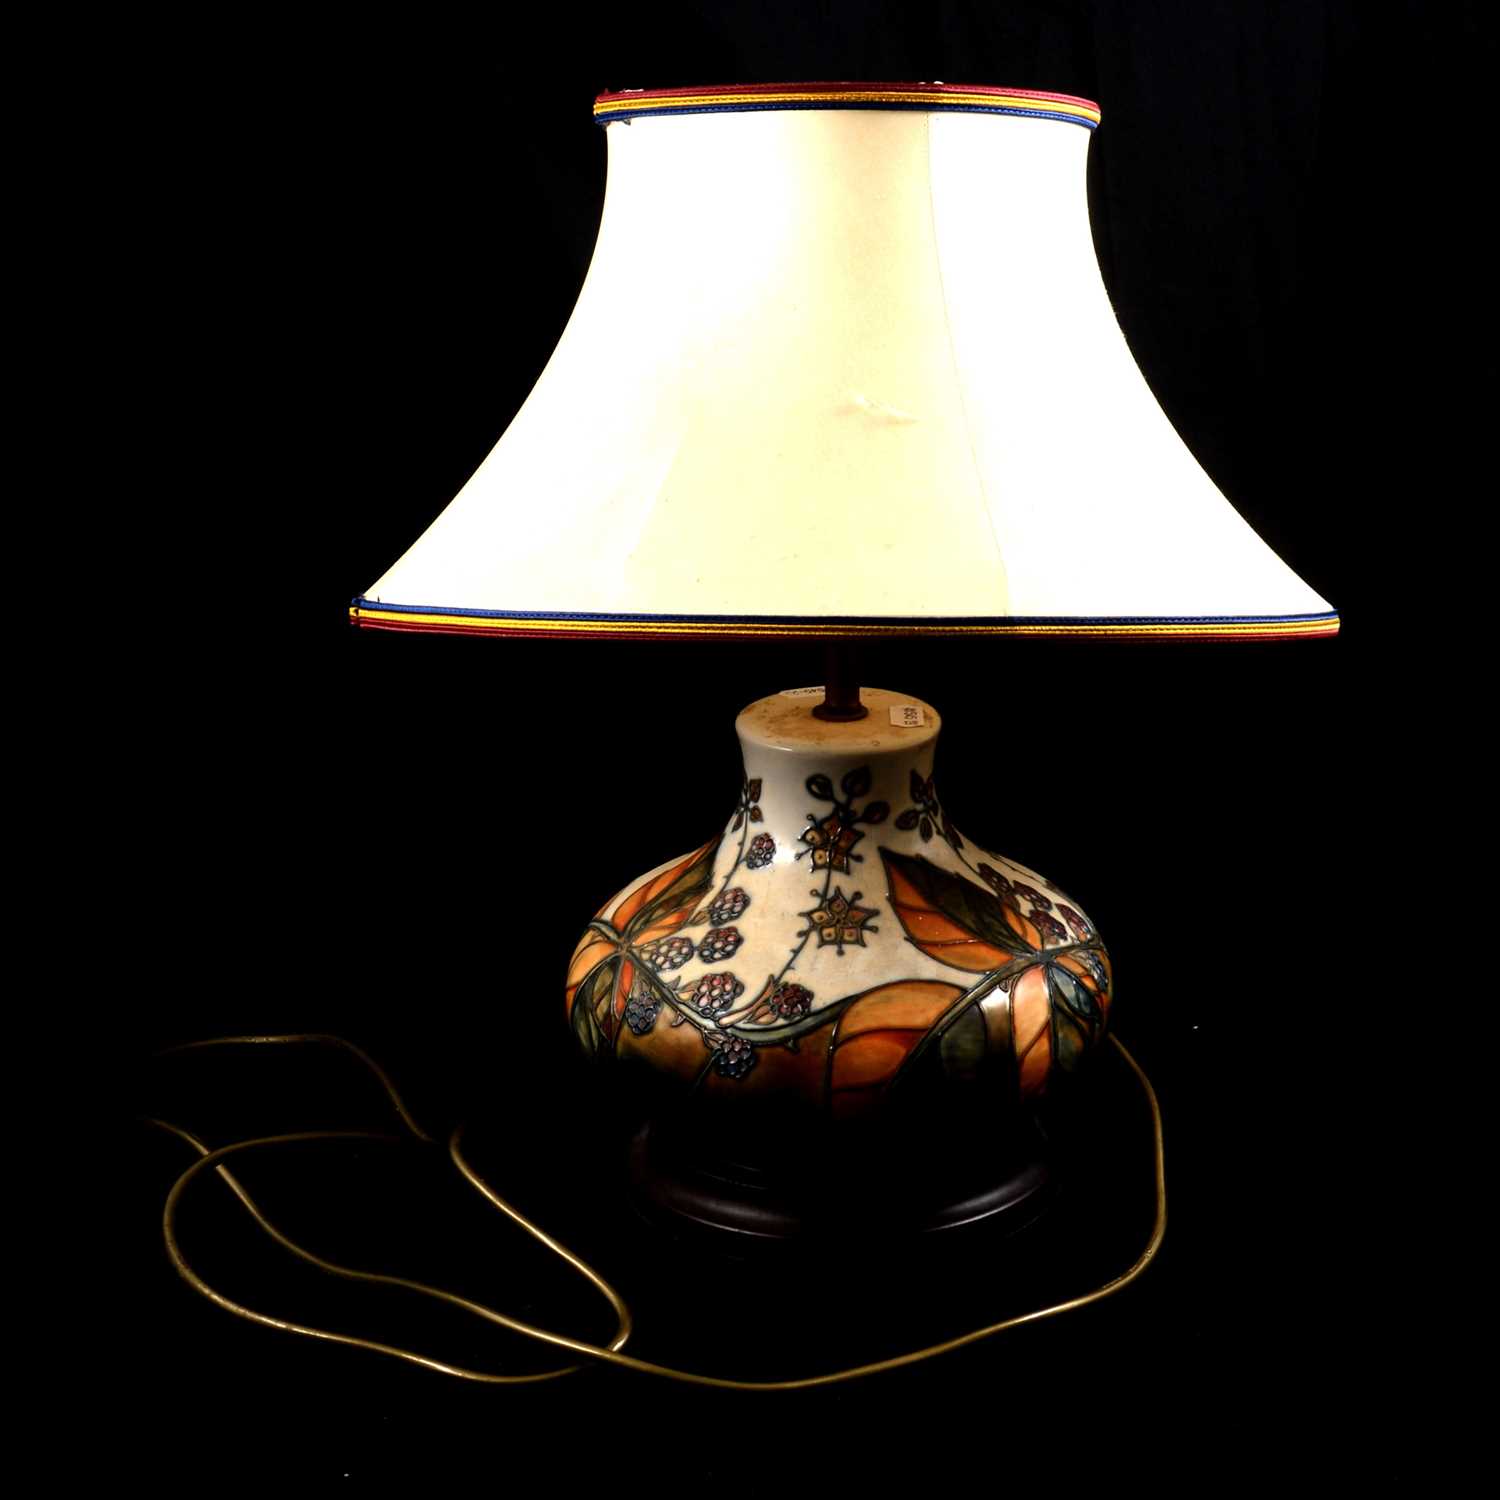 Moorcroft Pottery lamp base, 'Brambles' pattern designed by Sally Tuffin